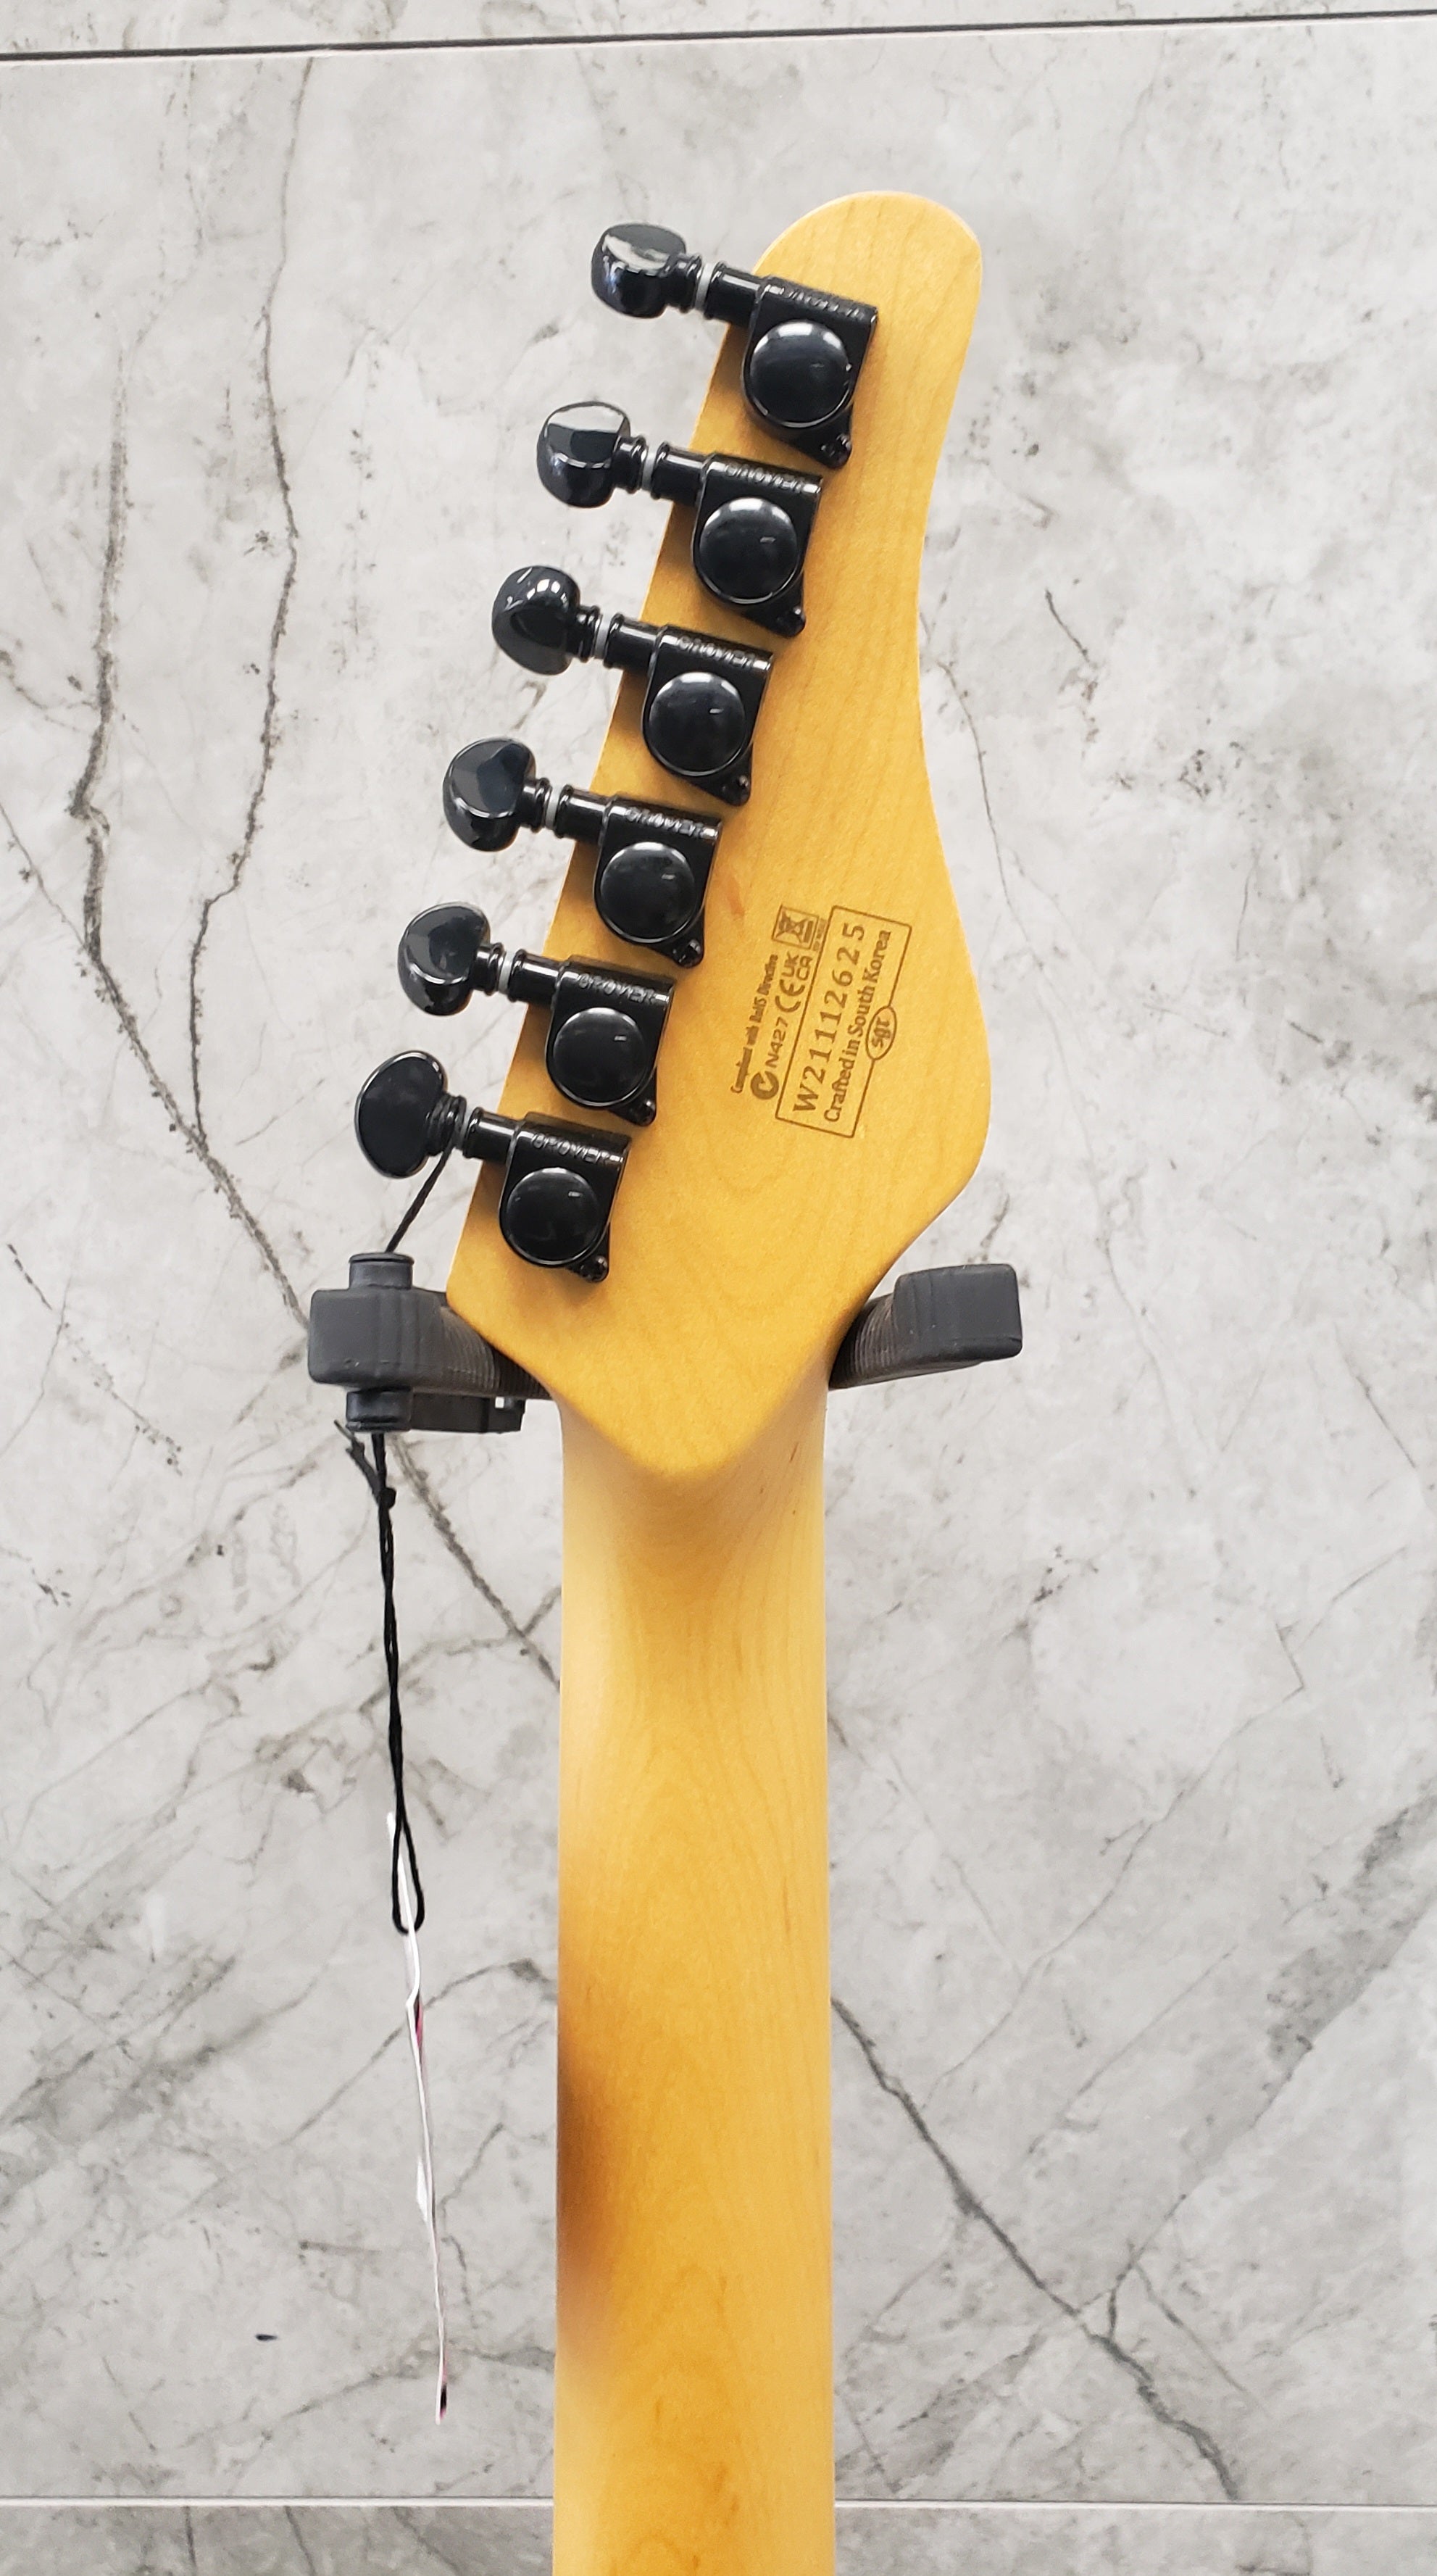 Schecter PT-MM-LH-BLK LEFT HANDED PT Gloss Black Guitar 2200-SHC